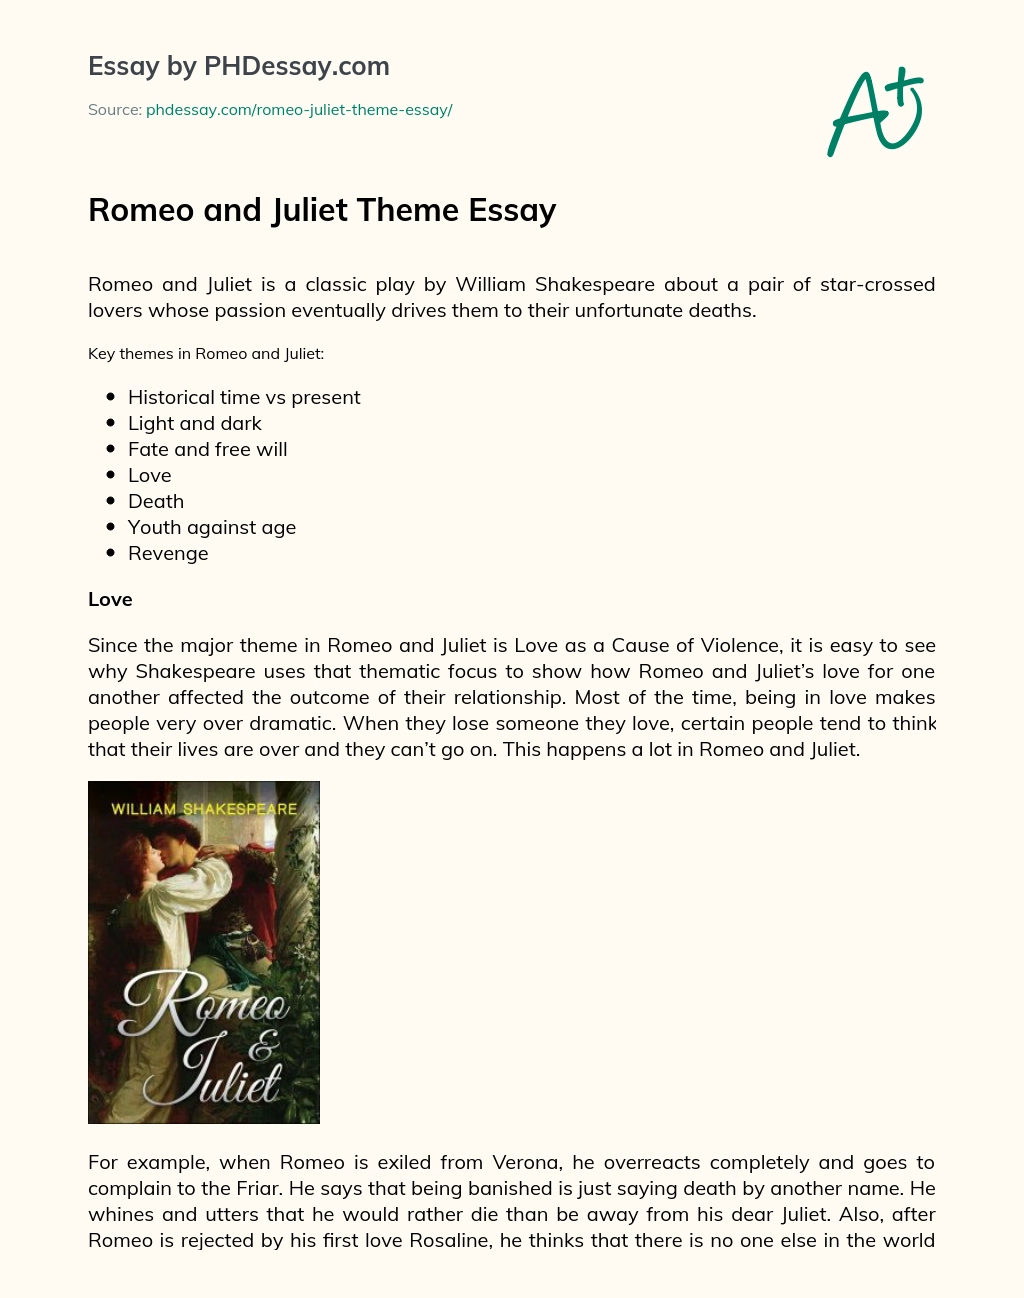 Romeo and Juliet Theme Essay essay